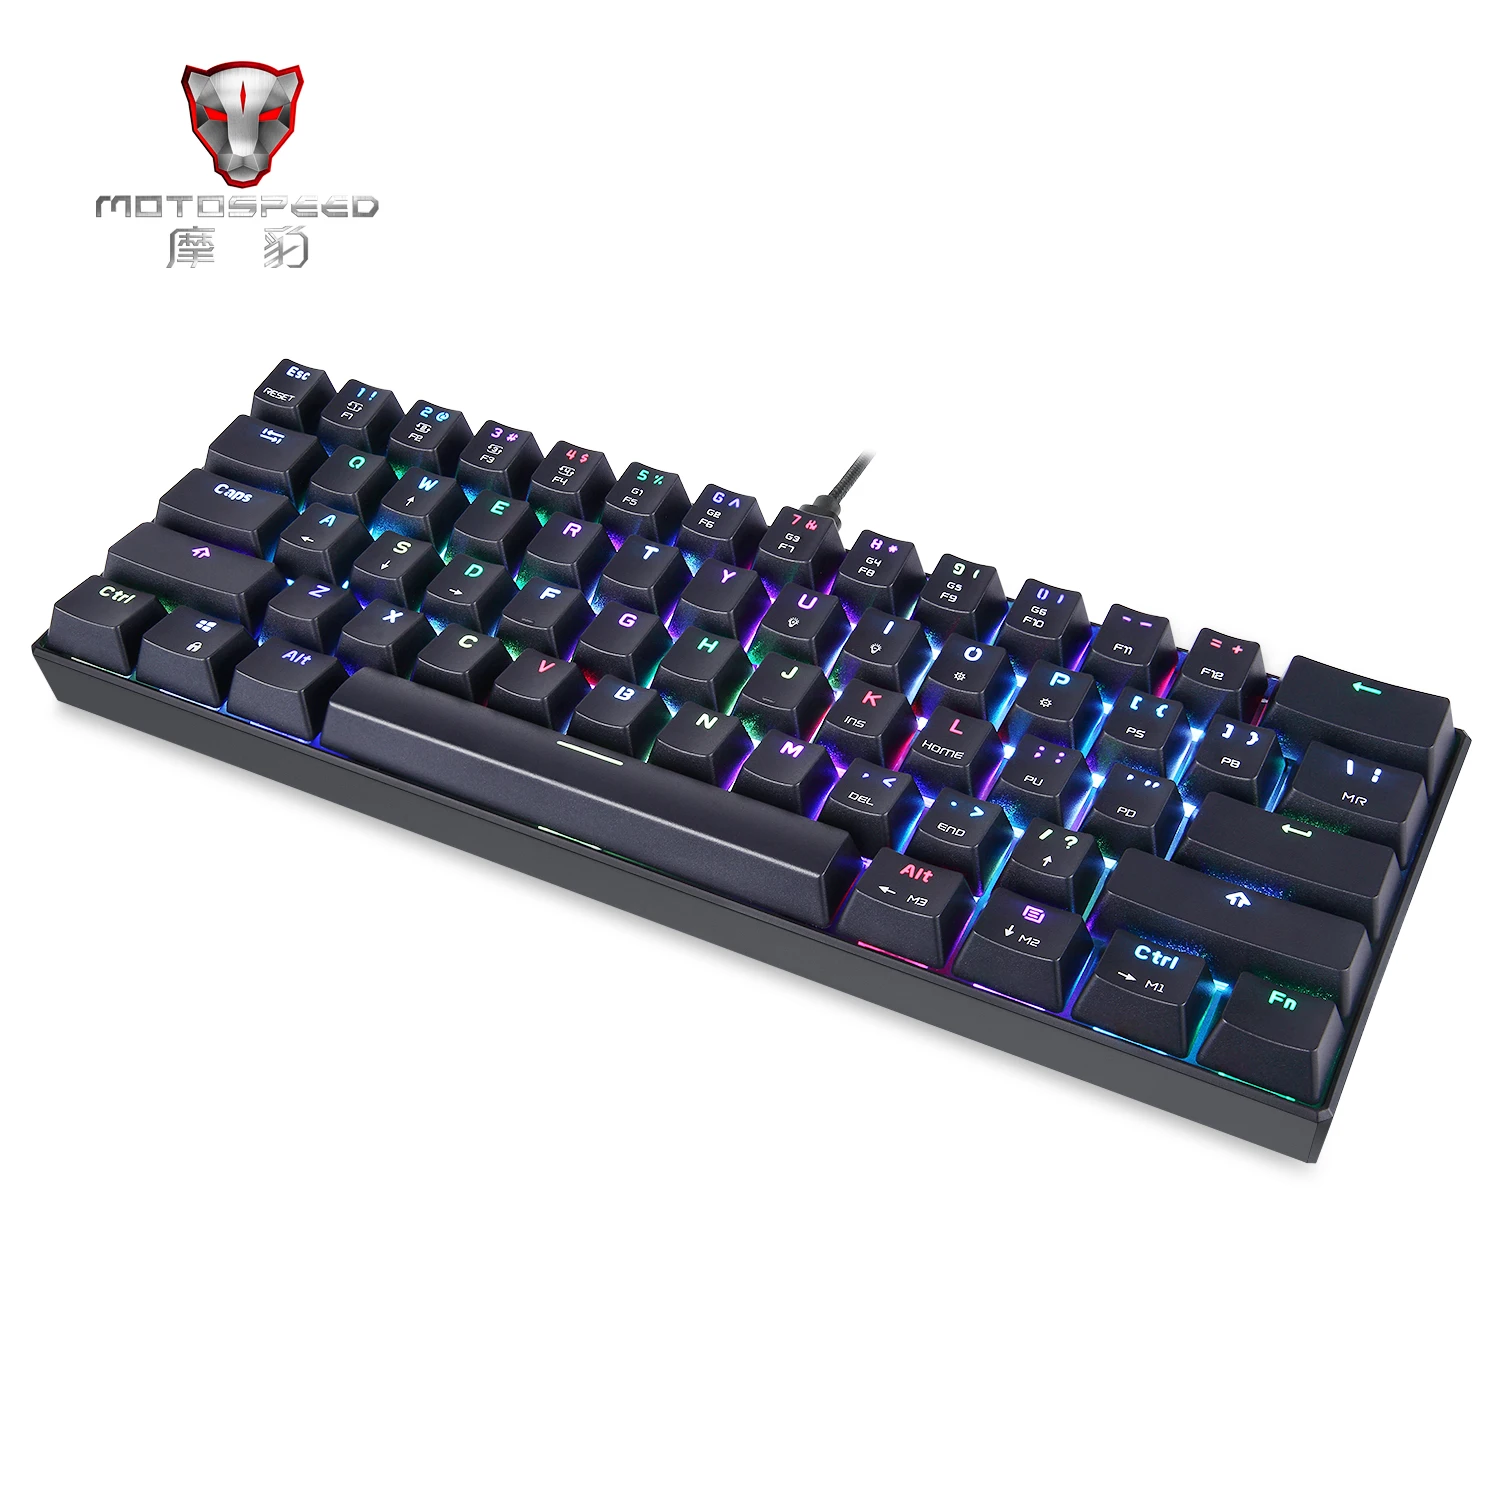  MOTOSPEED CK61 Portable Mechanical Keyboard 61 Keys RGB Backlit Custom Lighting With BOX Axis Machi